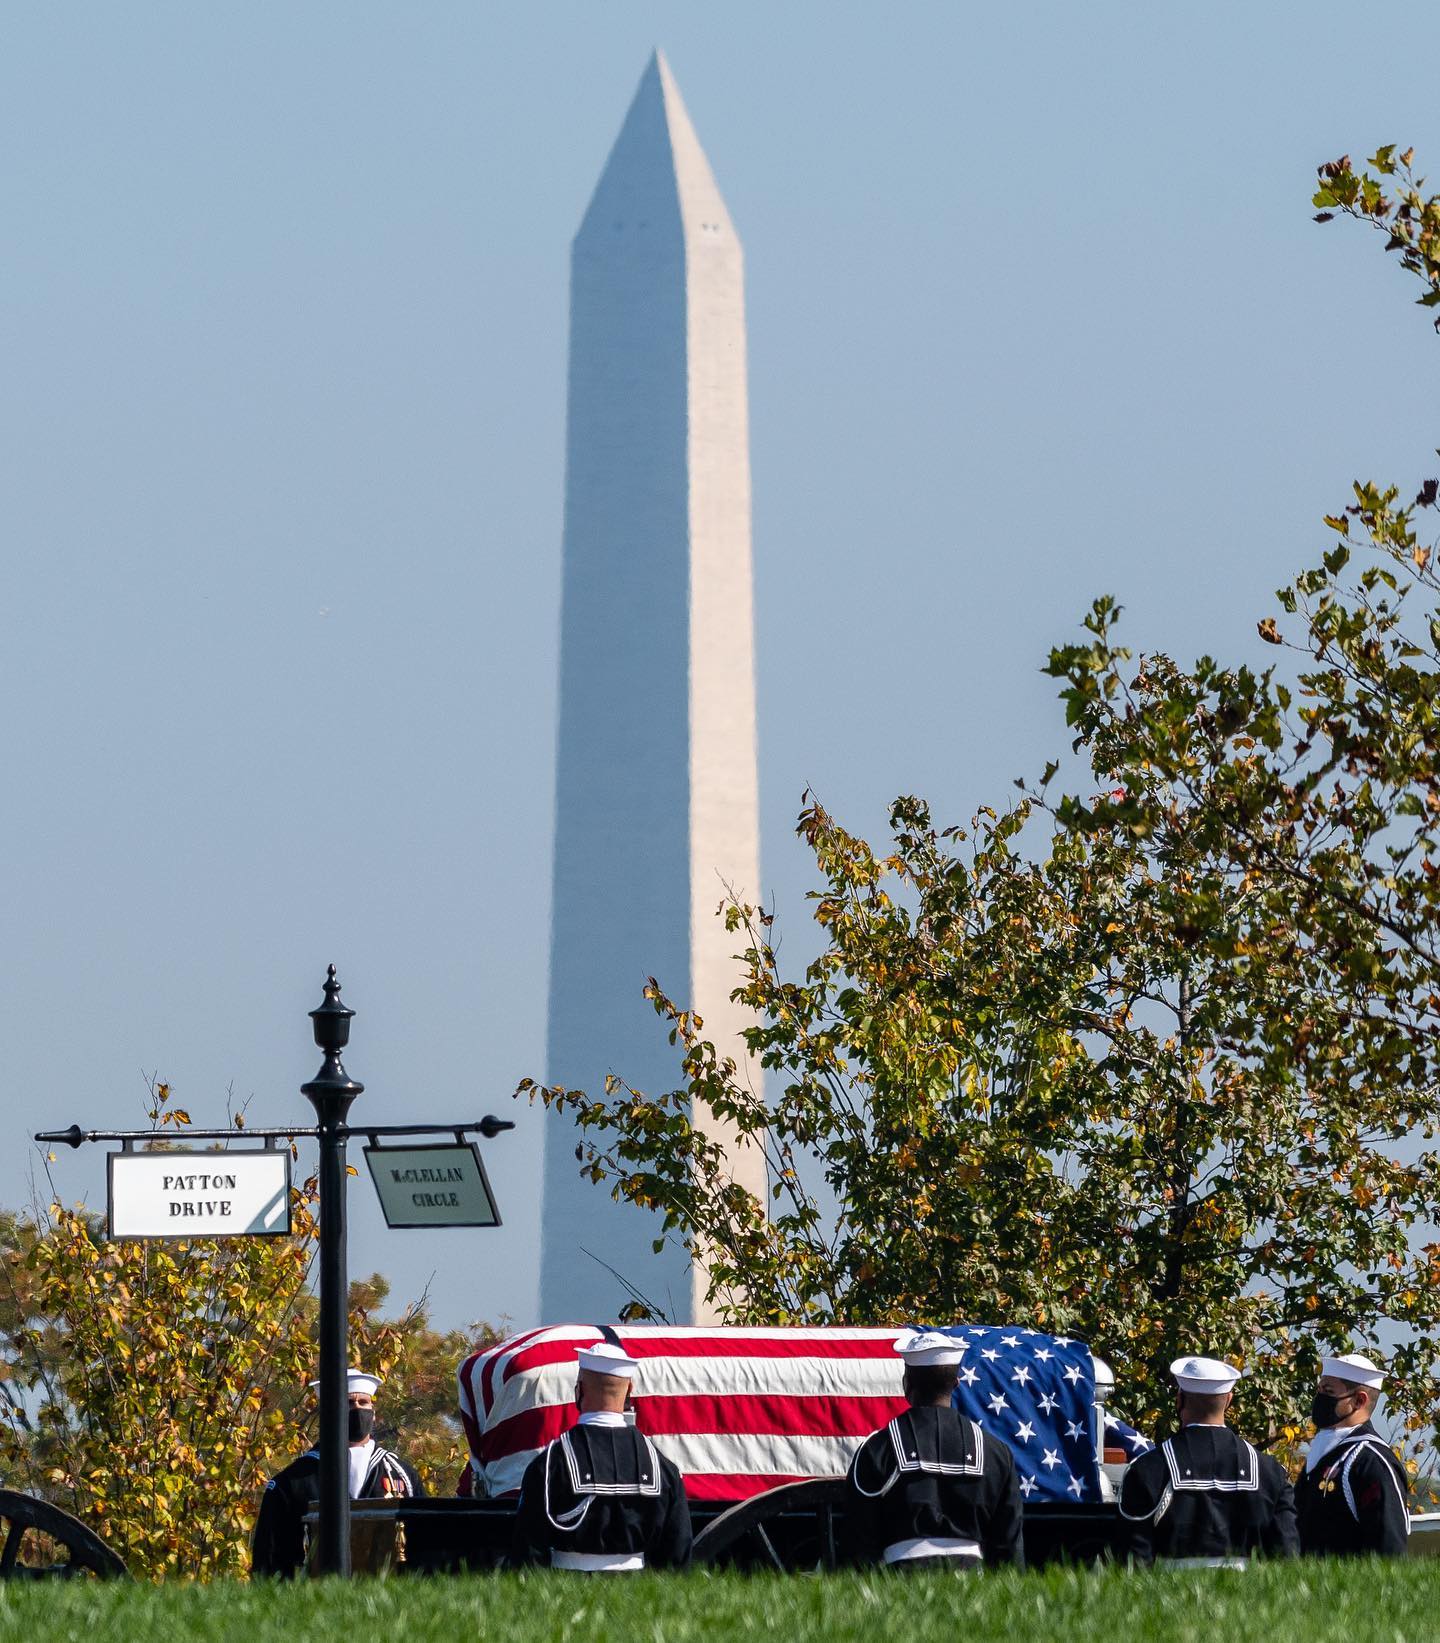 A ceremonial procession halts under the shadow of the Washington Monument along Patton Drive in Arlington National Cemetery, Arlington, Virginia.